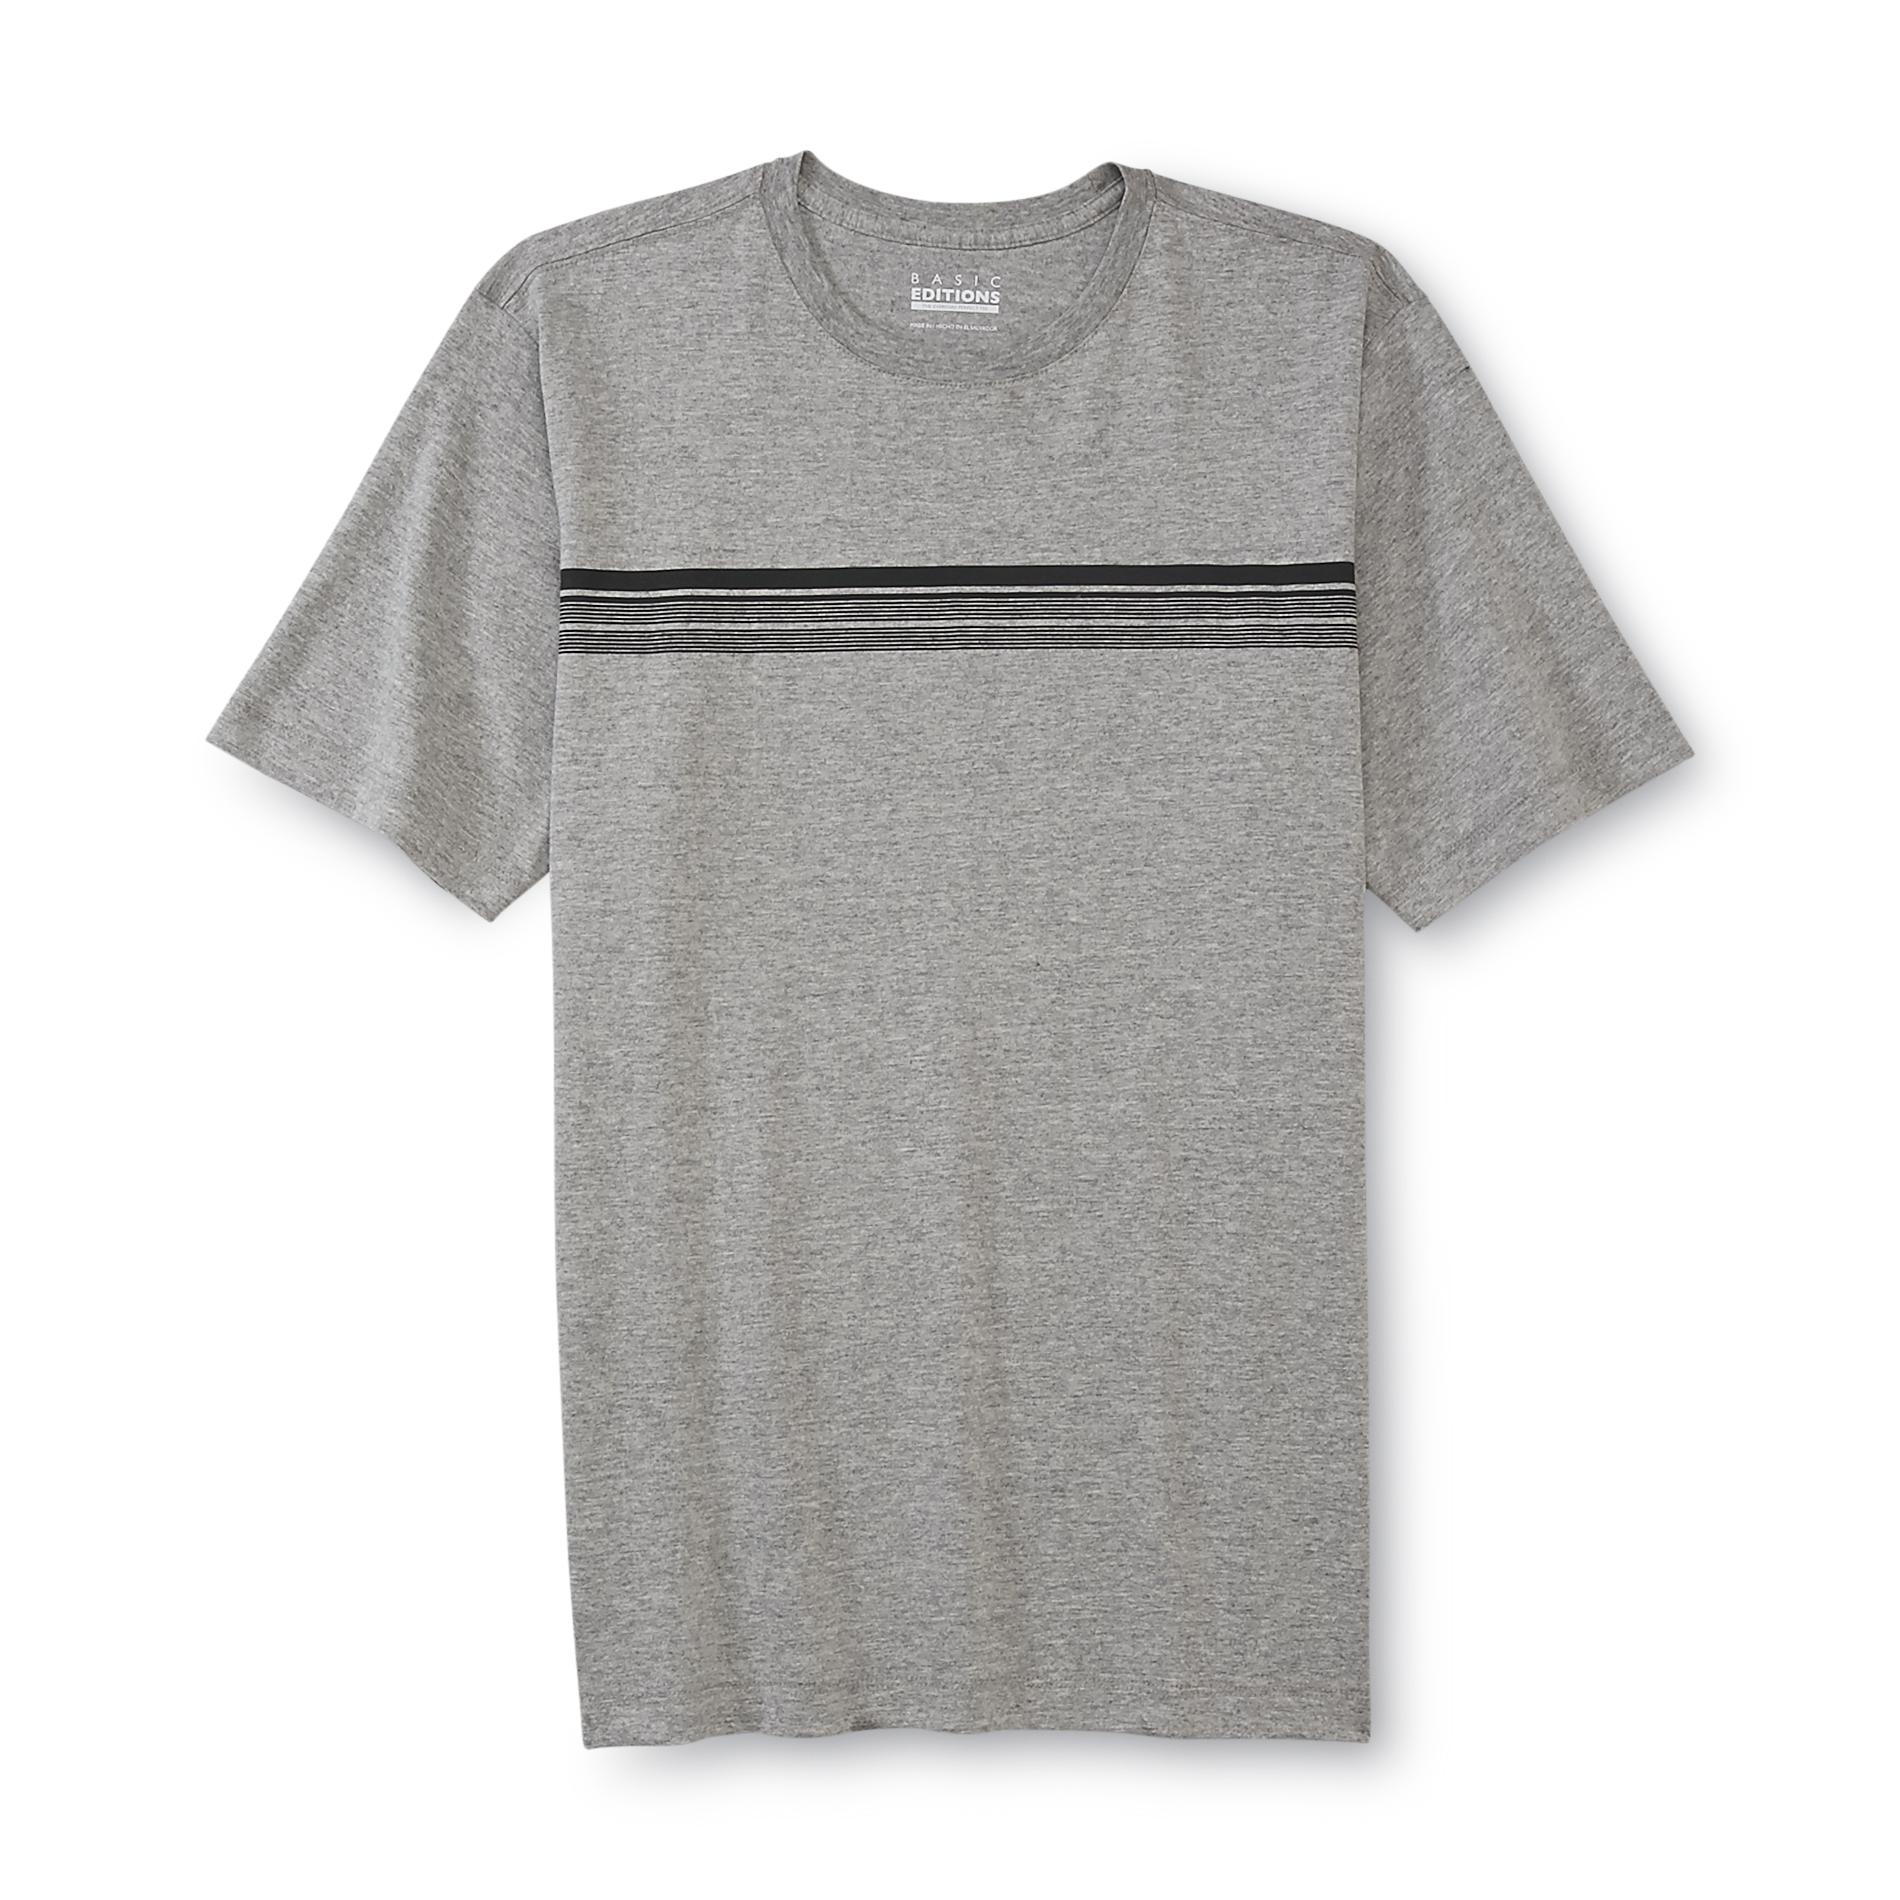 Basic Editions Men's Crew Neck T-Shirt - Heathered & Striped